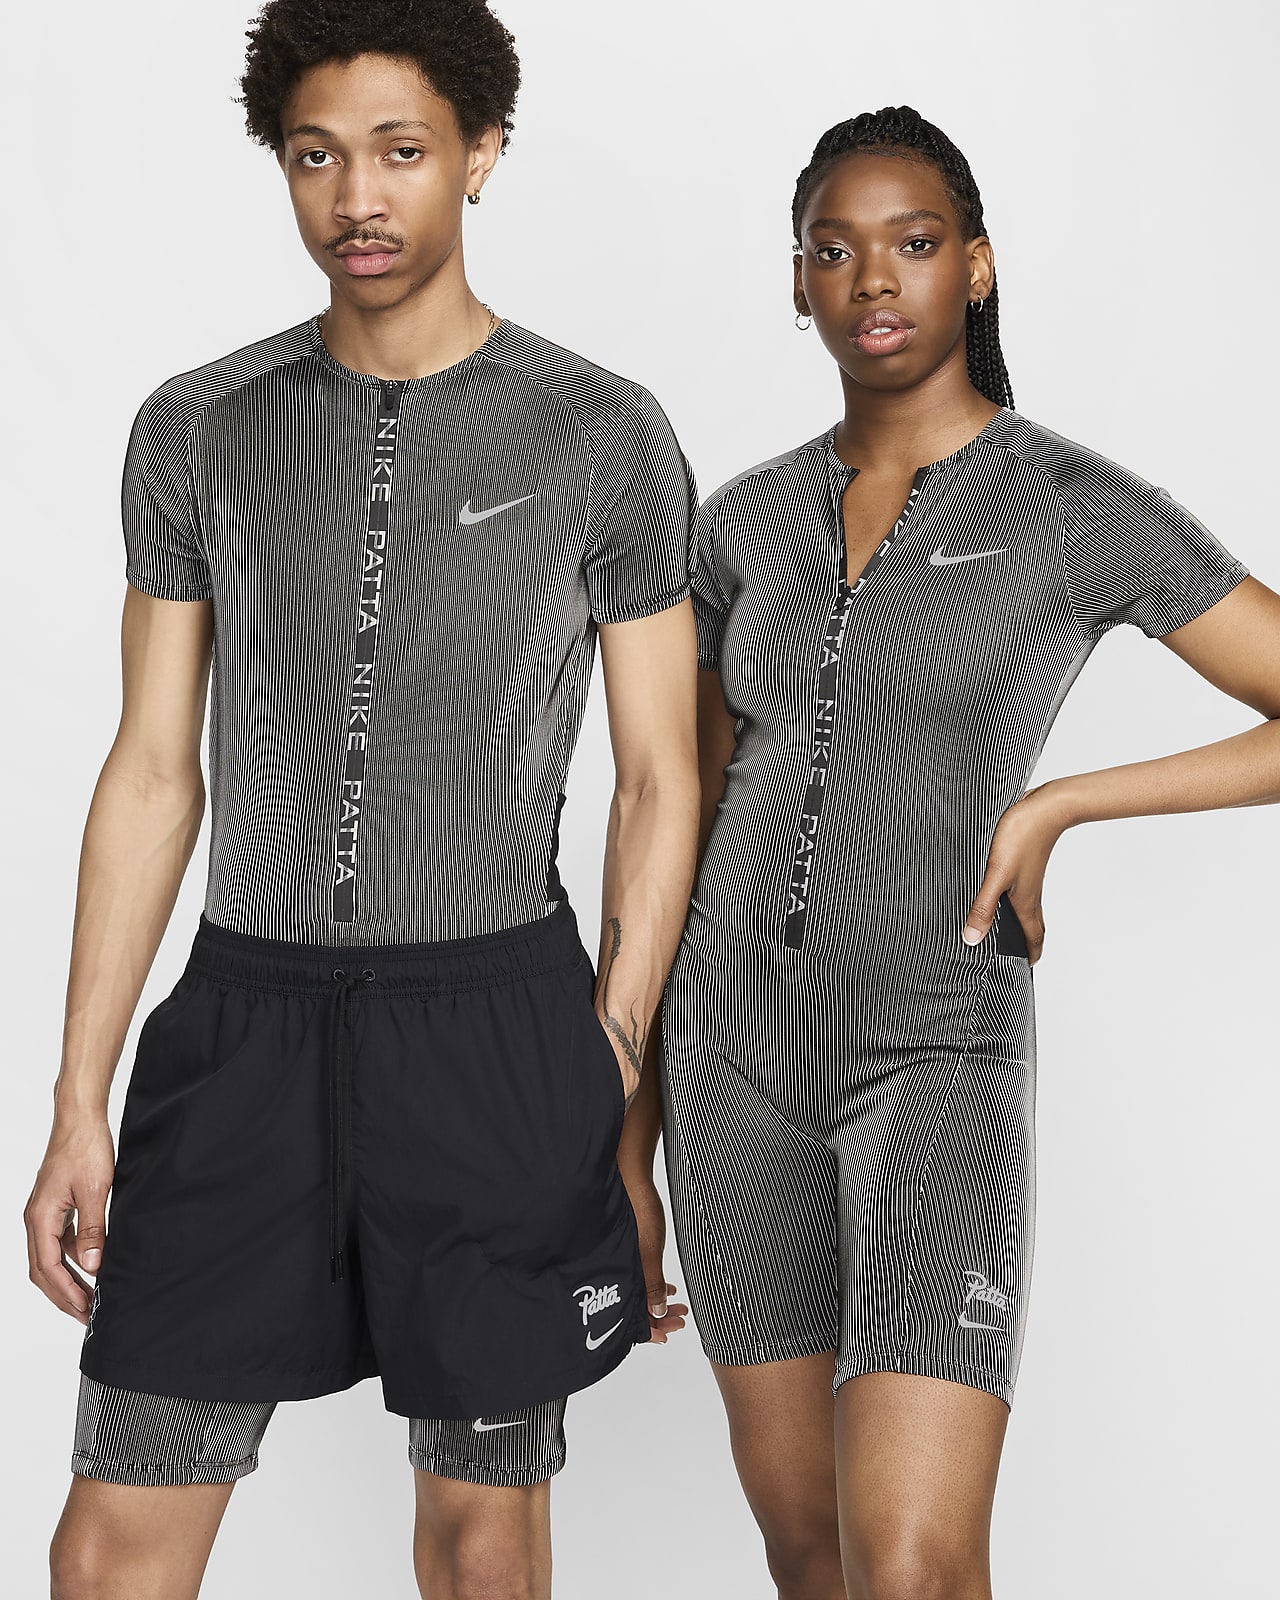 Nike x Patta Running Team Race Suit